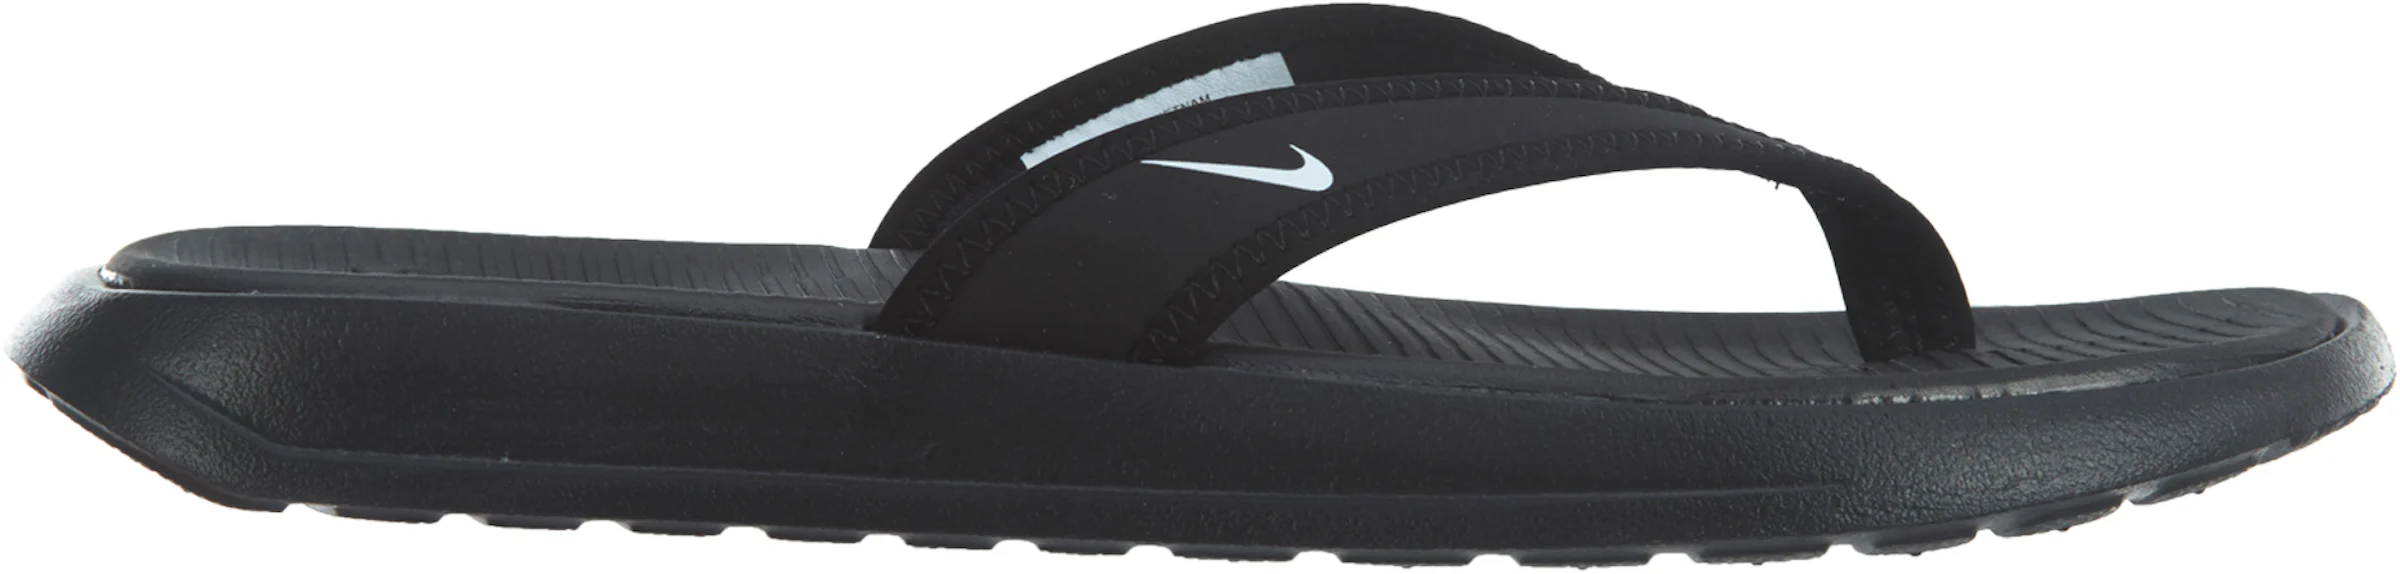 New Nike Celso Thong Plus Black/White Ladies 7